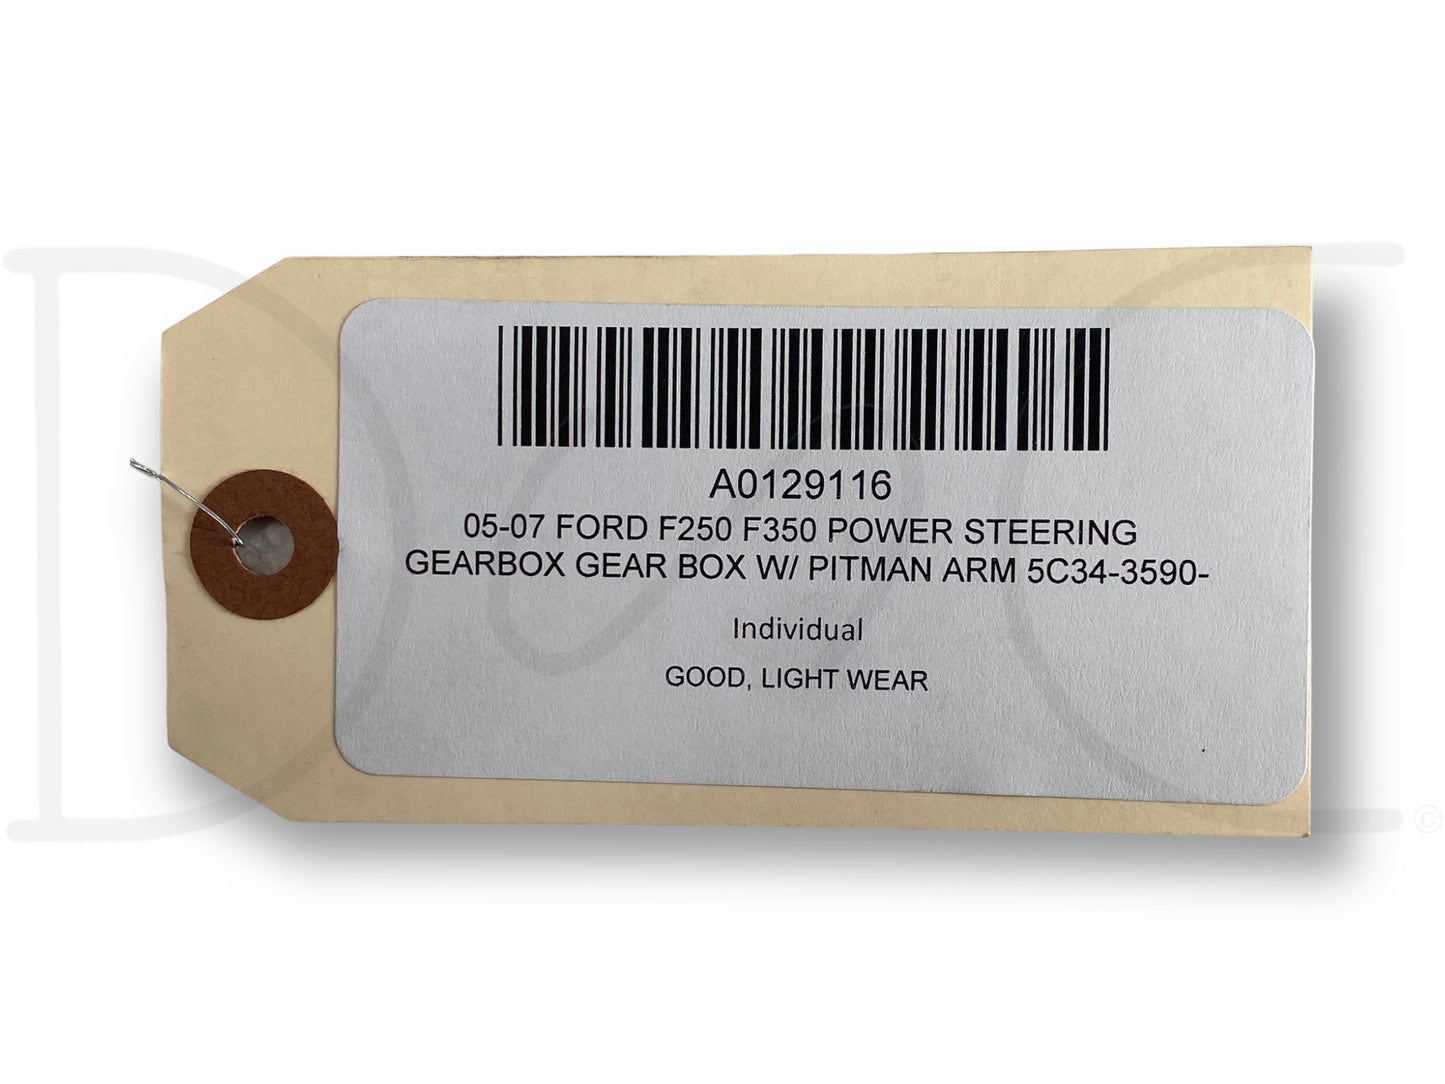 04-07 Ford F250 F350 6.0 6.0L Diesel Oil Level Dipstick Dip Stick Guide Tube